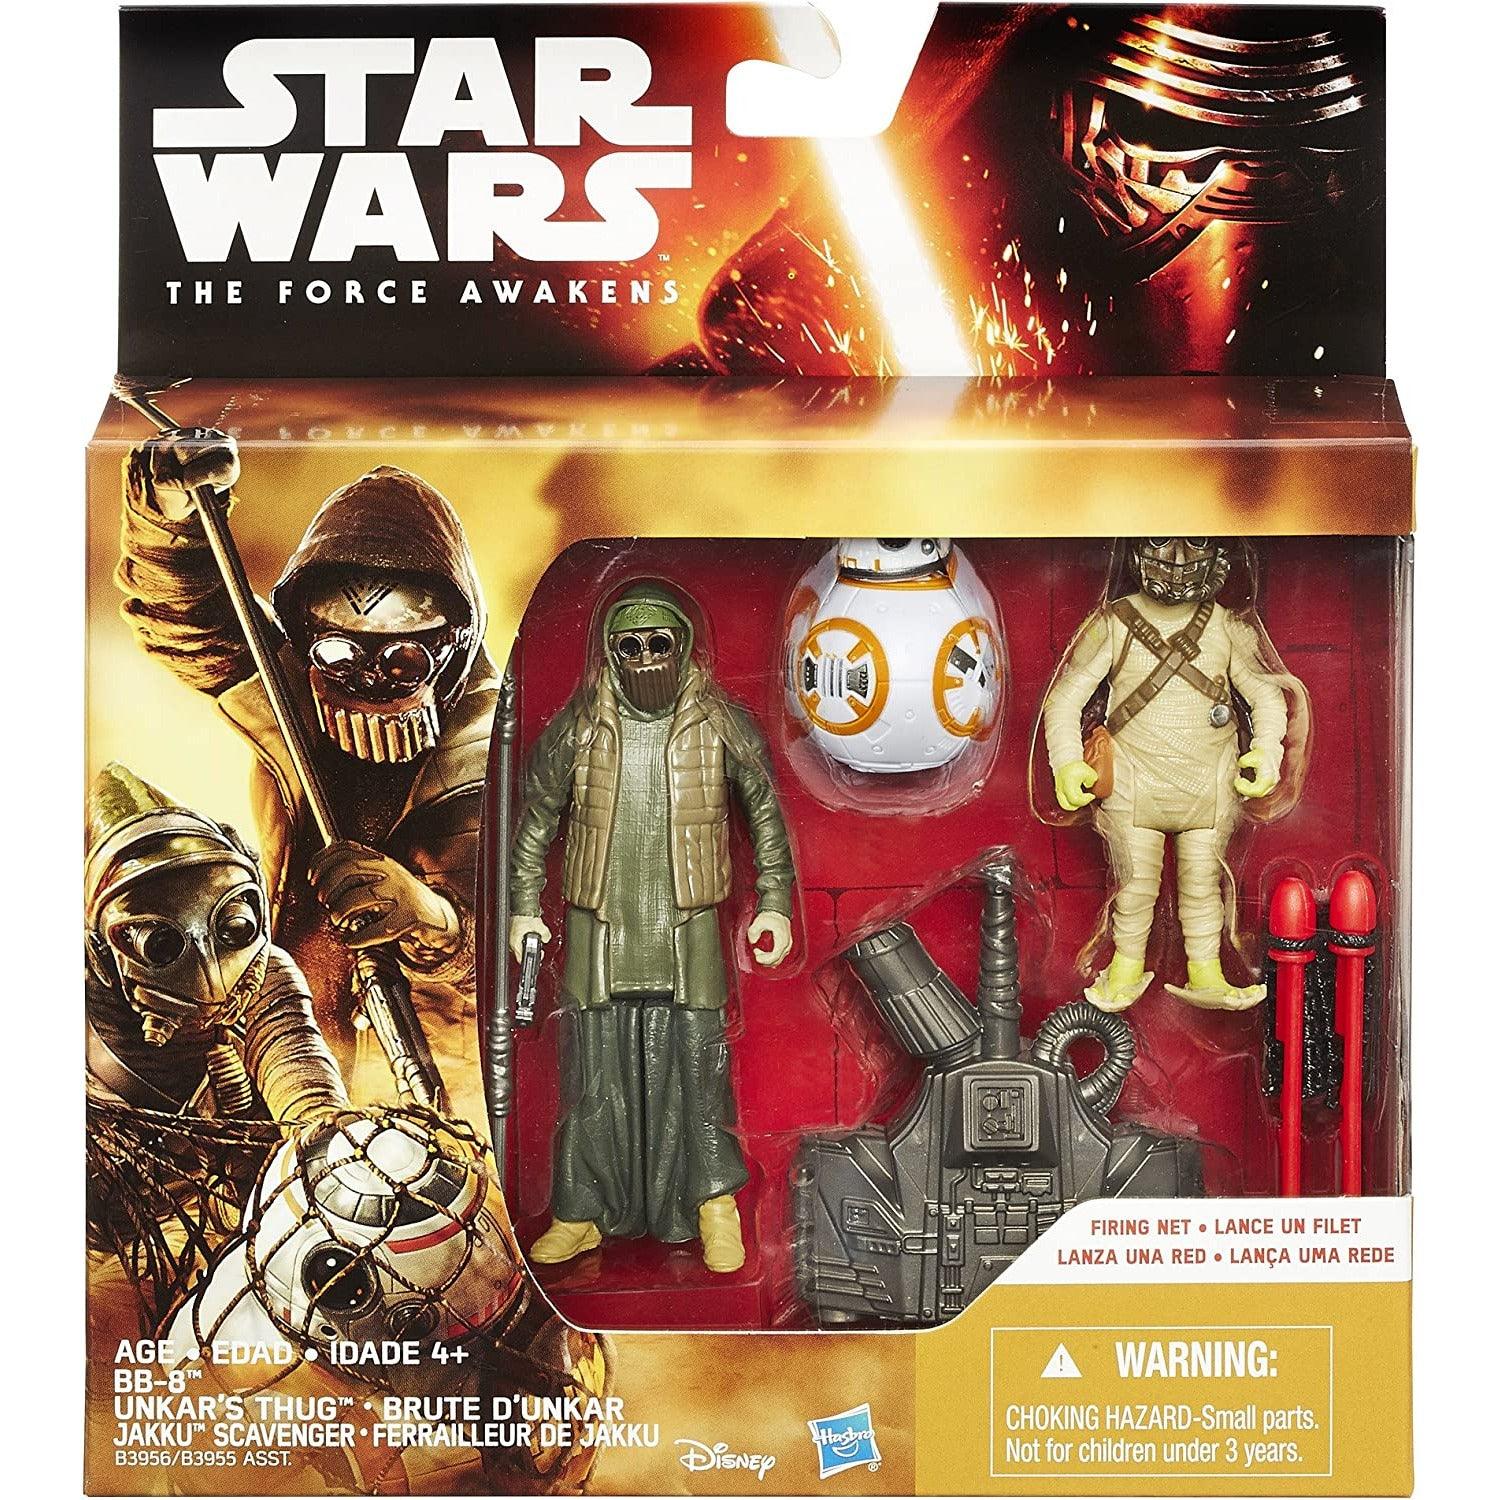 Star Wars The Force Awakens 3.75-Inch Figure 3-Pack Desert Mission BB-8, Unkar's Thug, and Jakku Scavenger - BumbleToys - 18+, 5-7 Years, Action Figures, Boys, Hasbro, Pre-Order, star wars